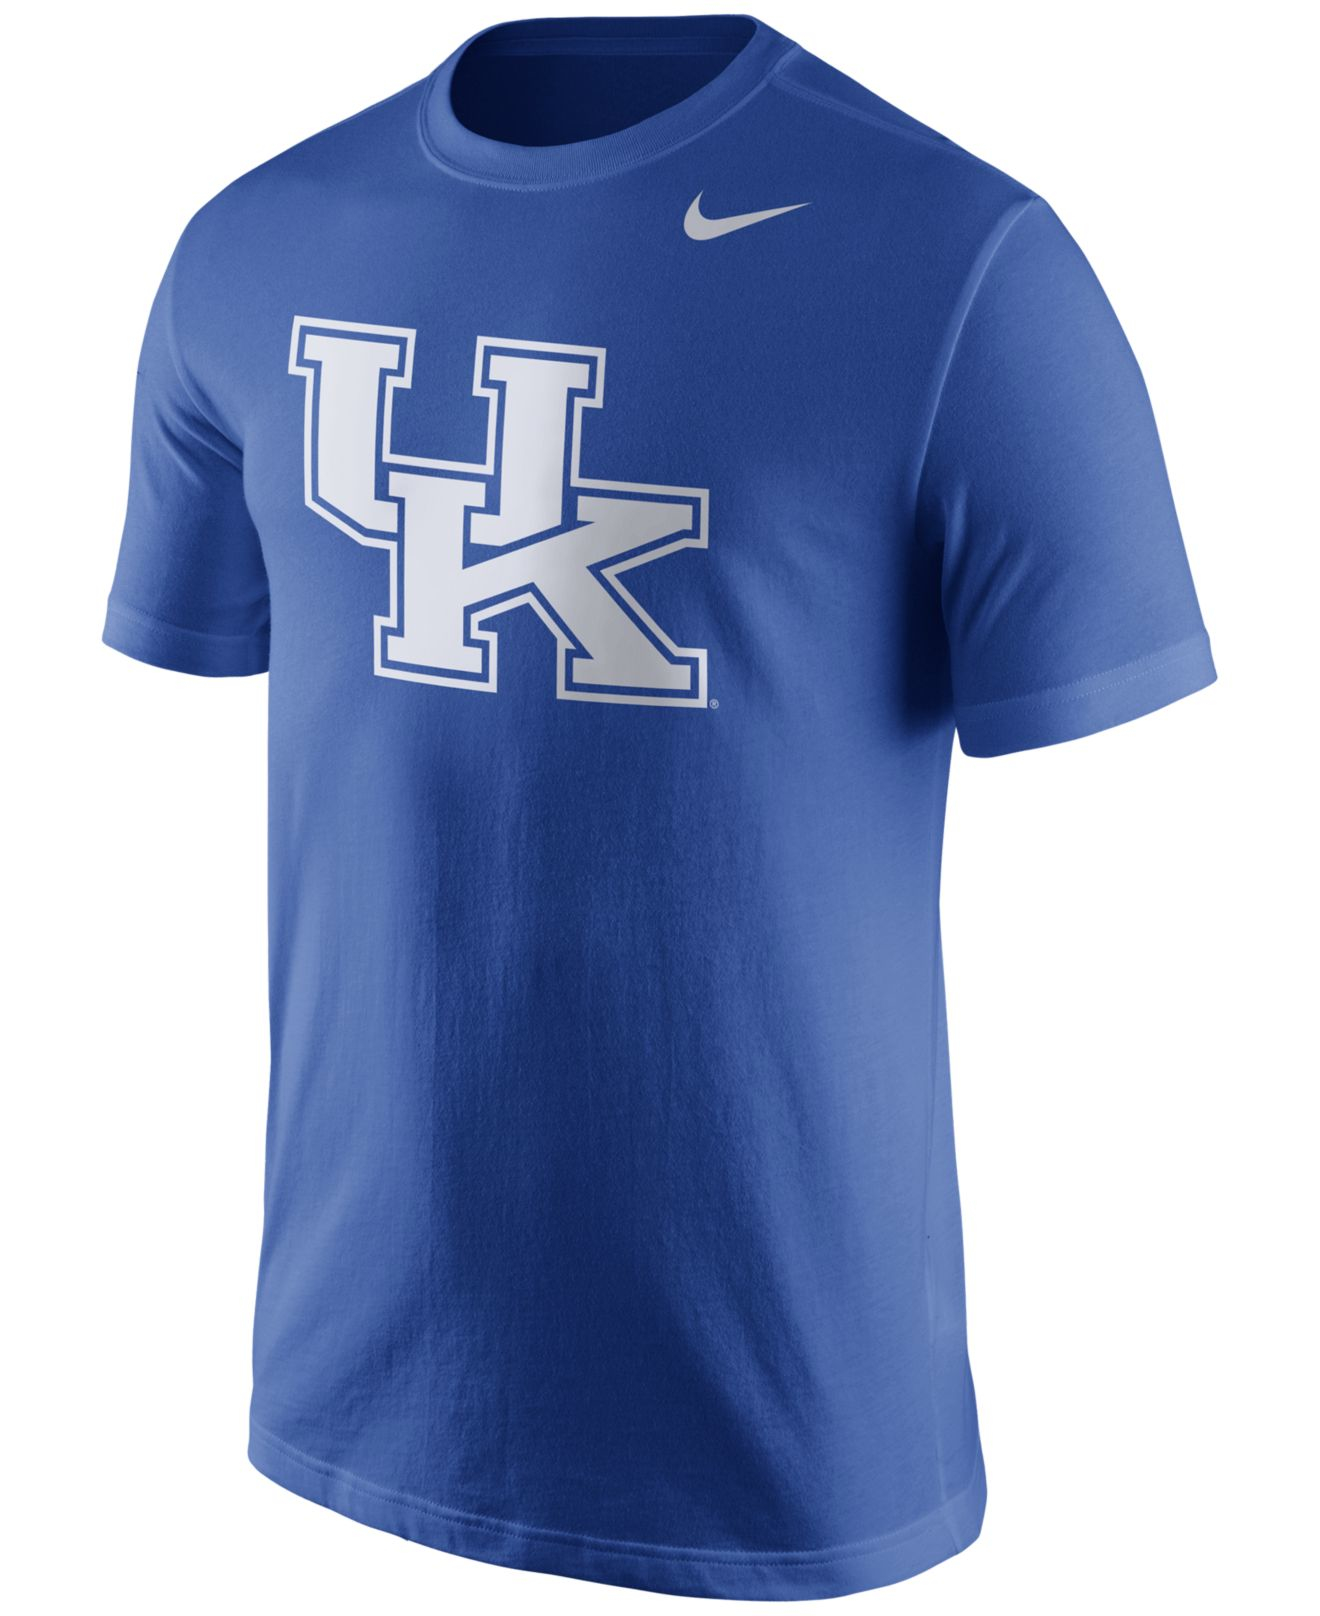 Lyst - Nike Men's Kentucky Wildcats Logo T-shirt in Blue for Men